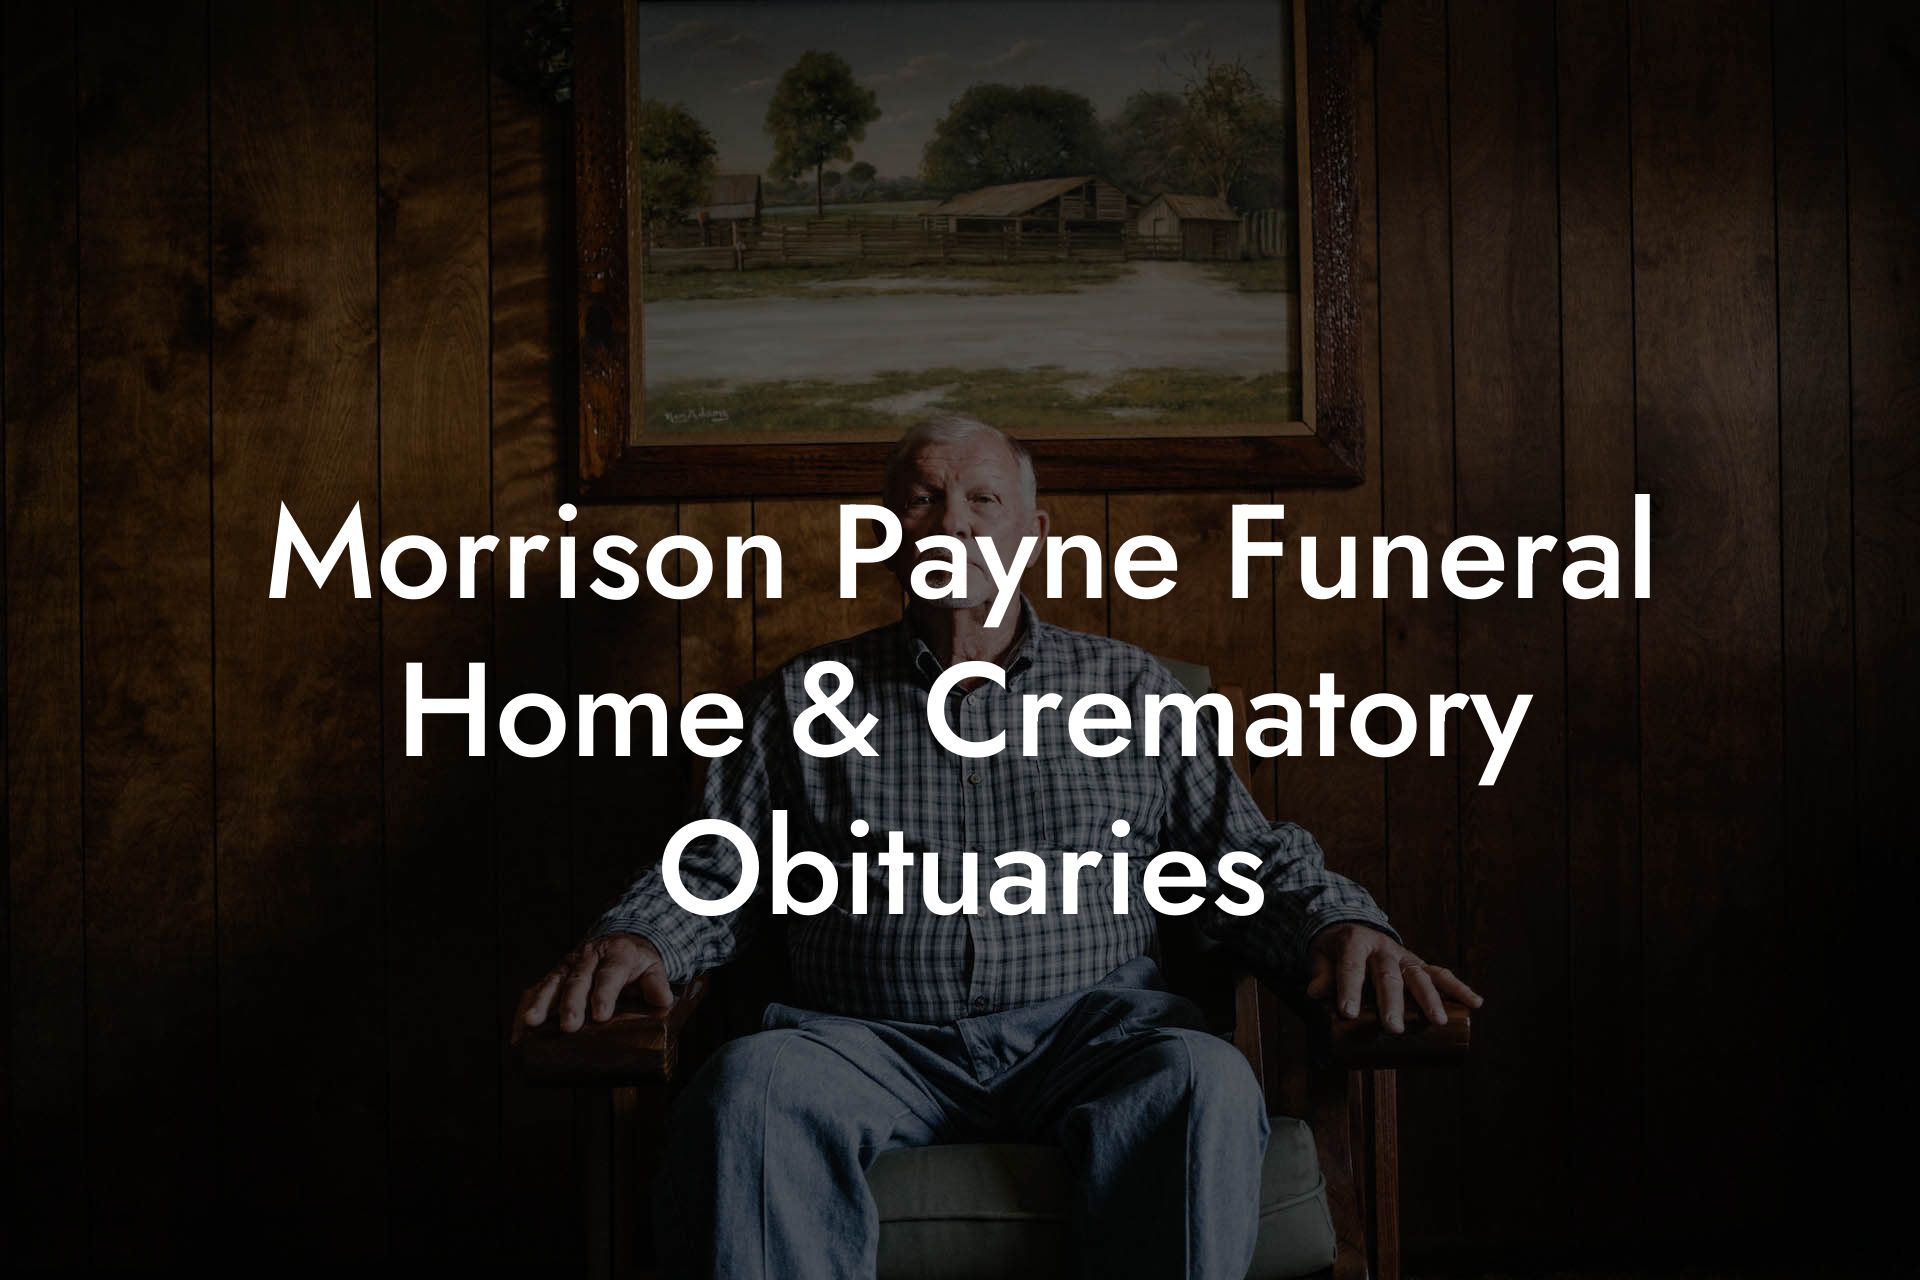 Morrison Payne Funeral Home & Crematory Obituaries